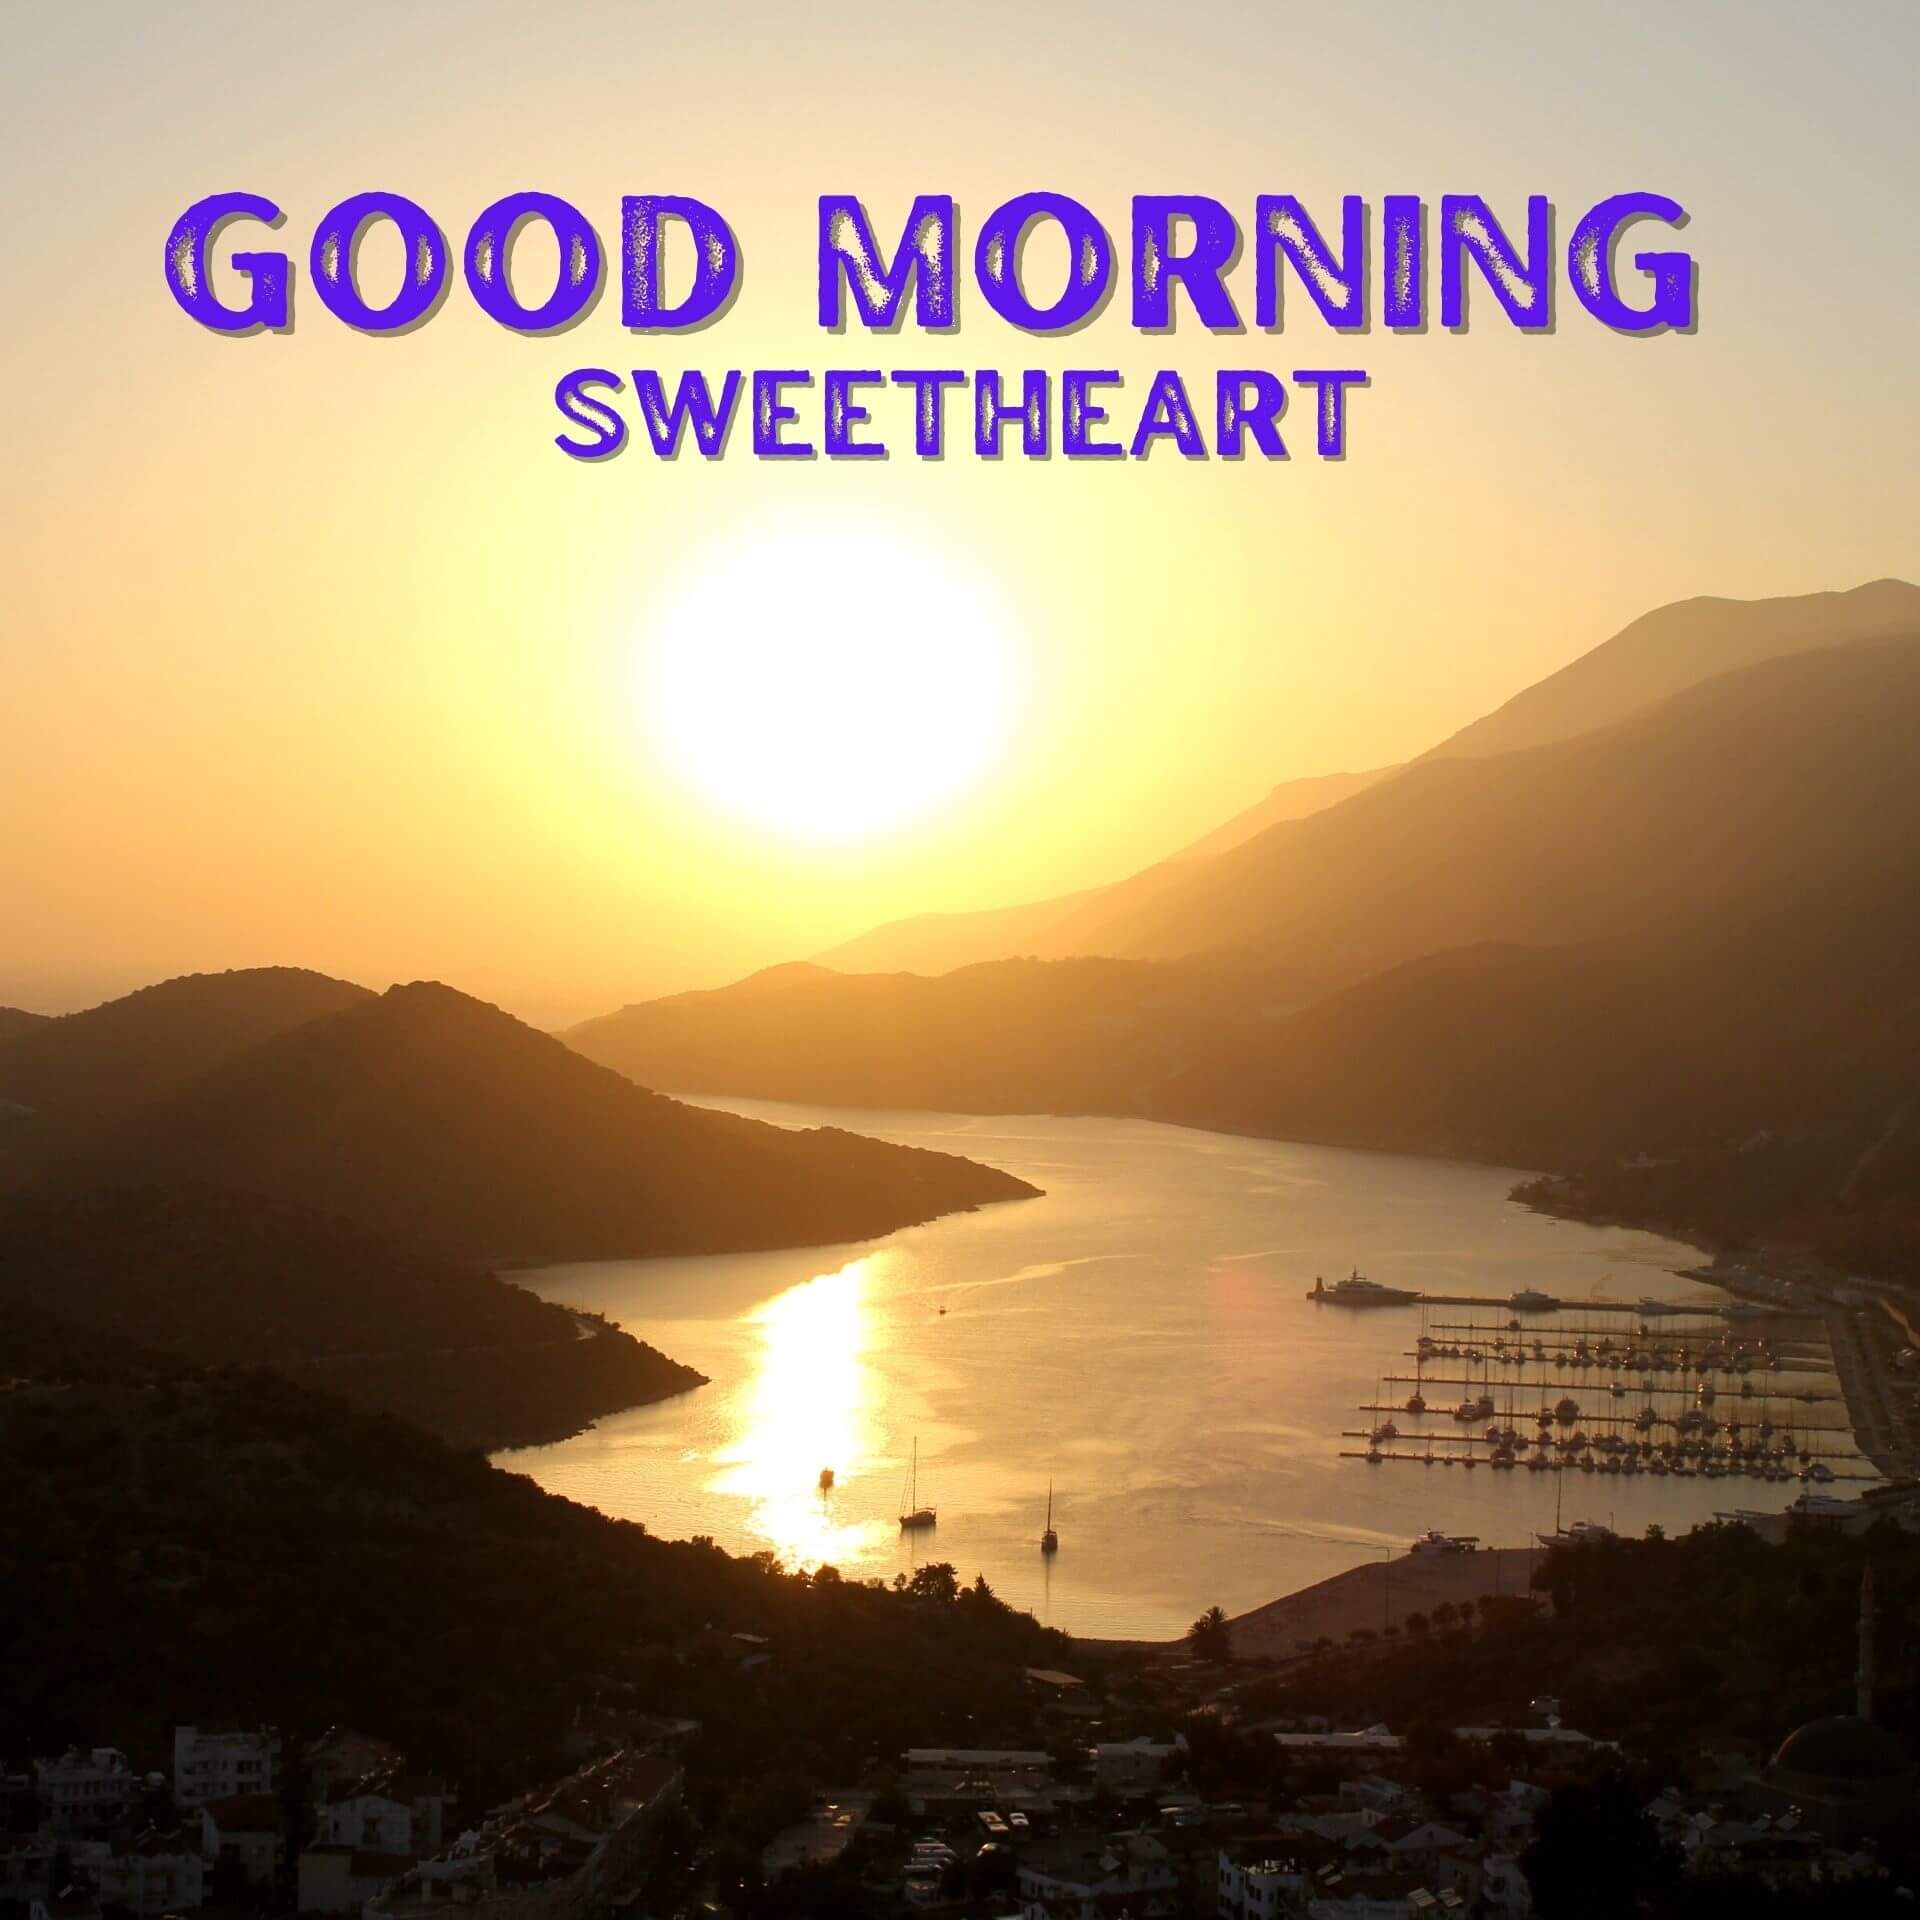 Download Sunrise Romantic Good Morning Images Download